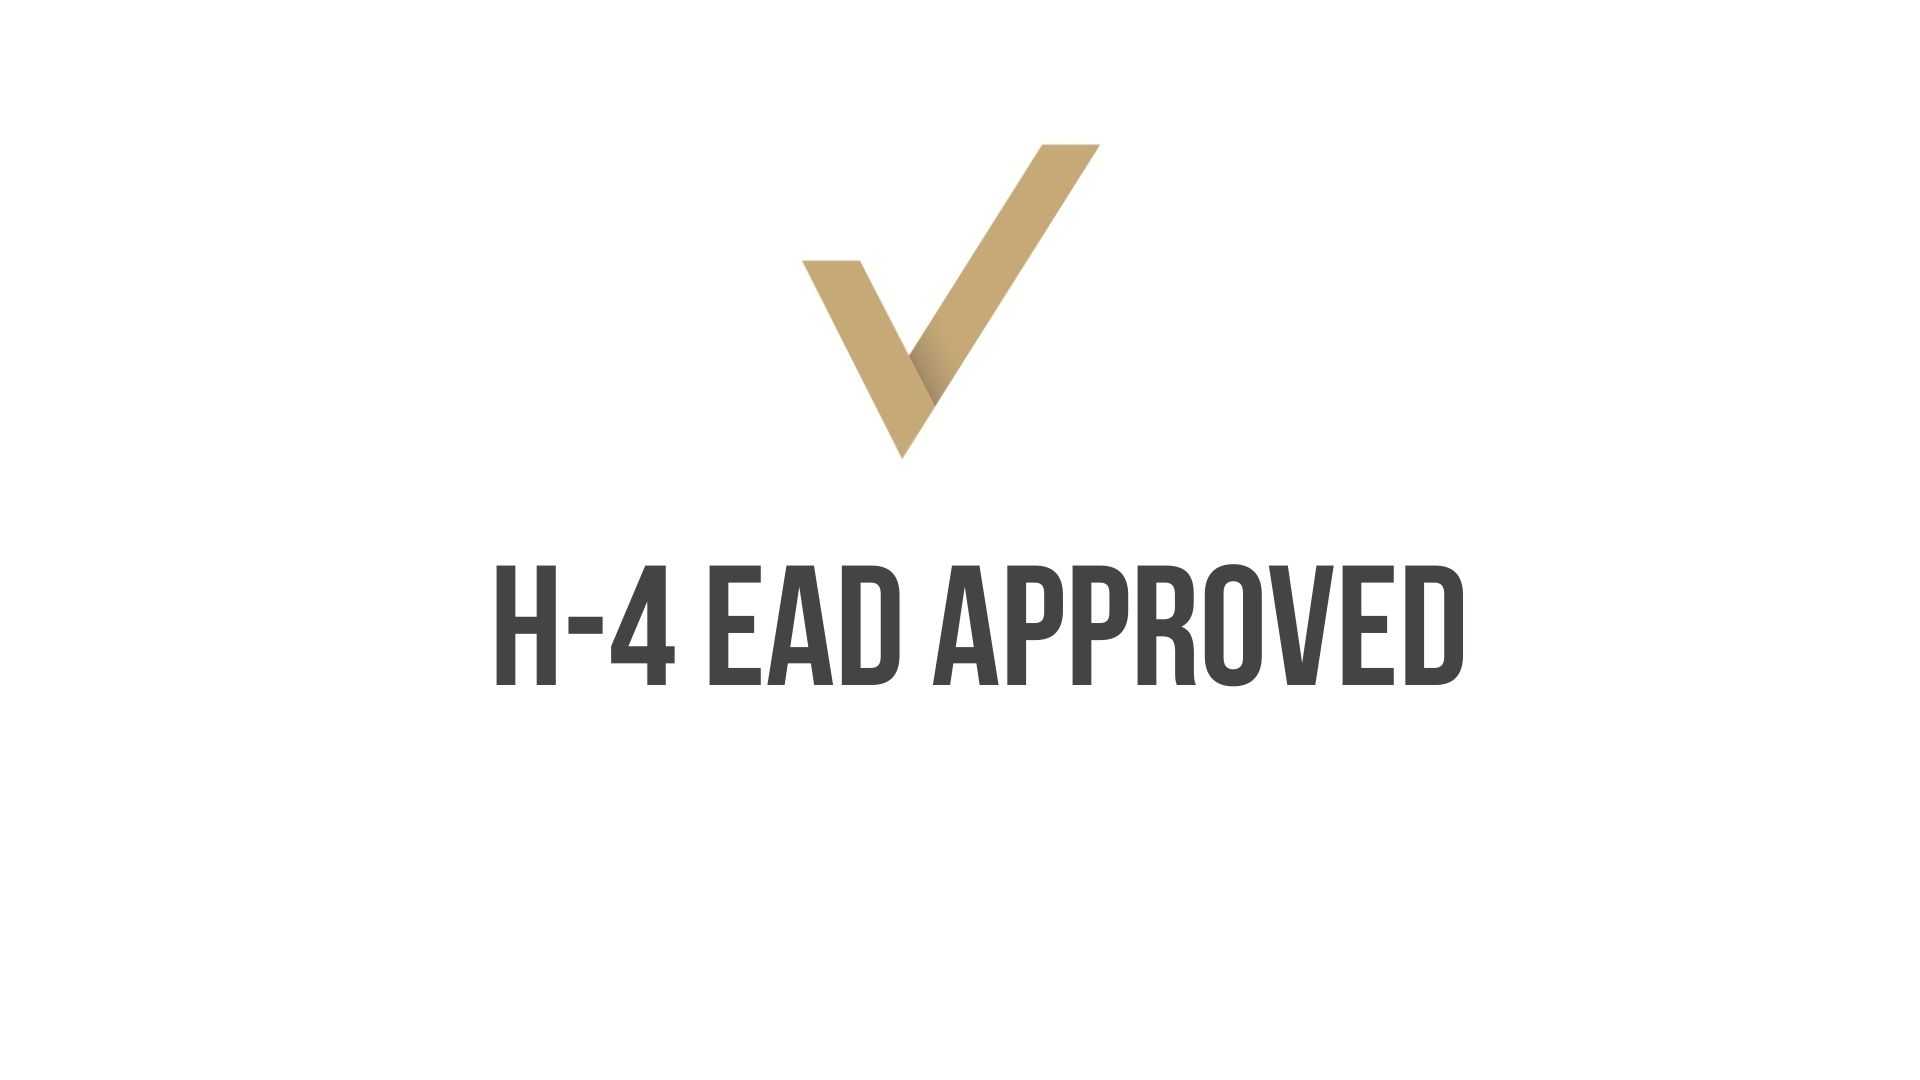 H-4 EAD Approval for Immediate Relative of H-1B Visa Holder